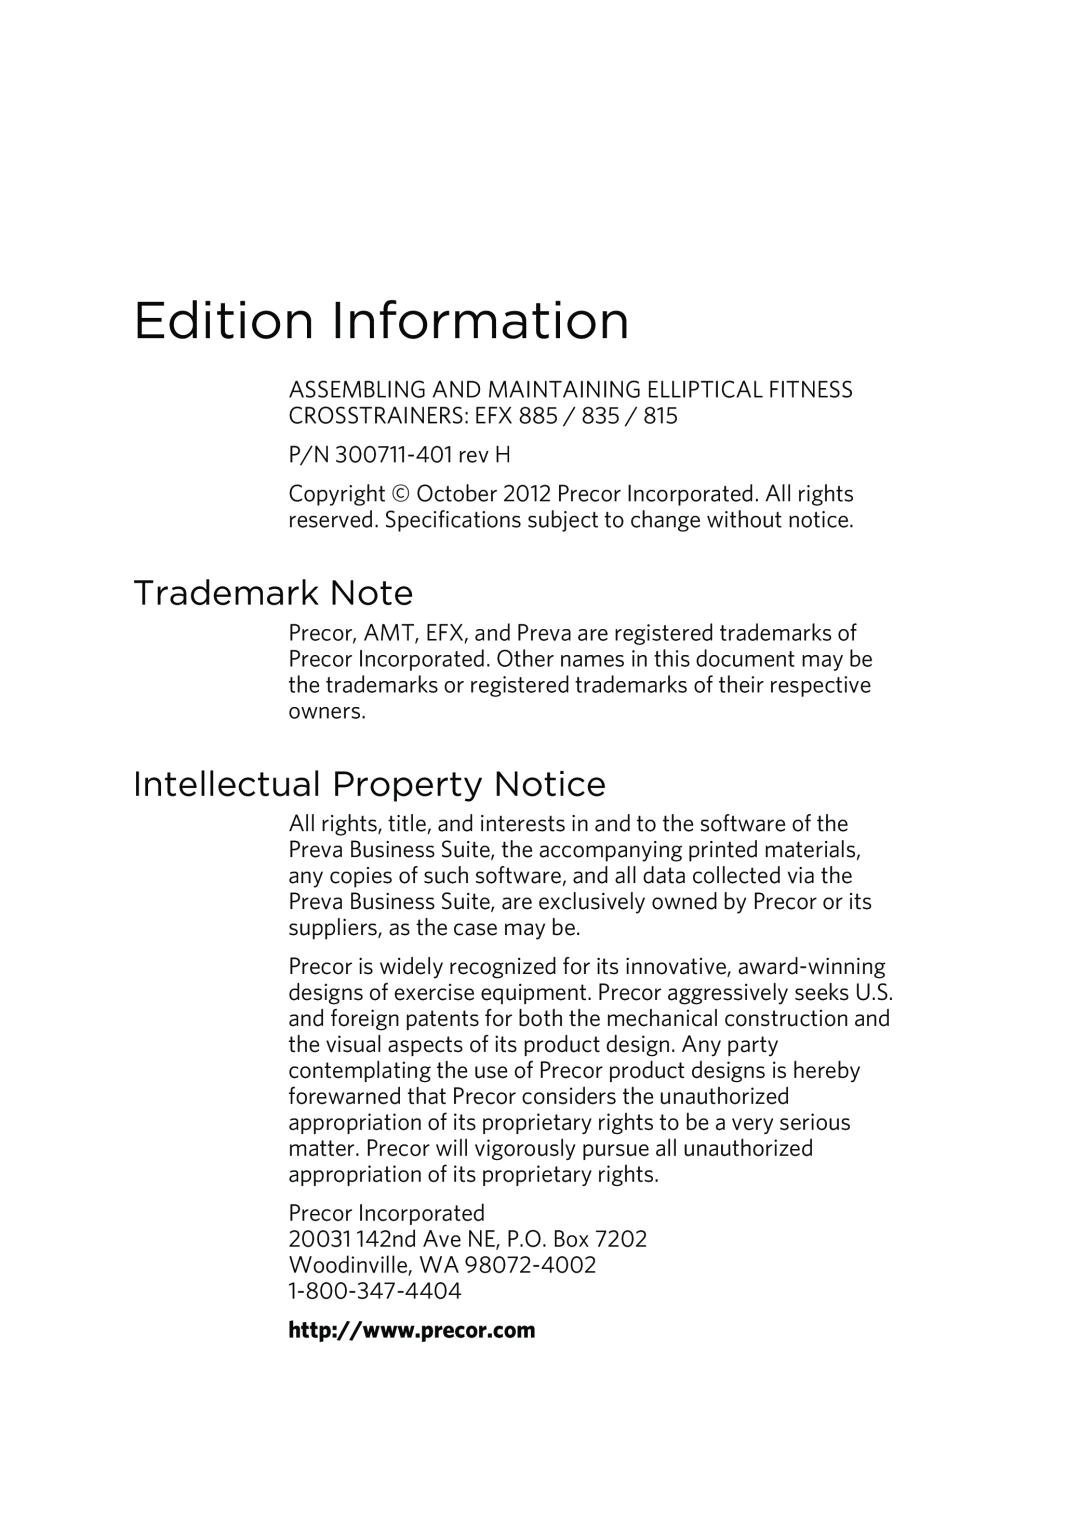 Precor P80 manual Edition Information, Trademark Note, Intellectual Property Notice, P/N 300711-401rev H 